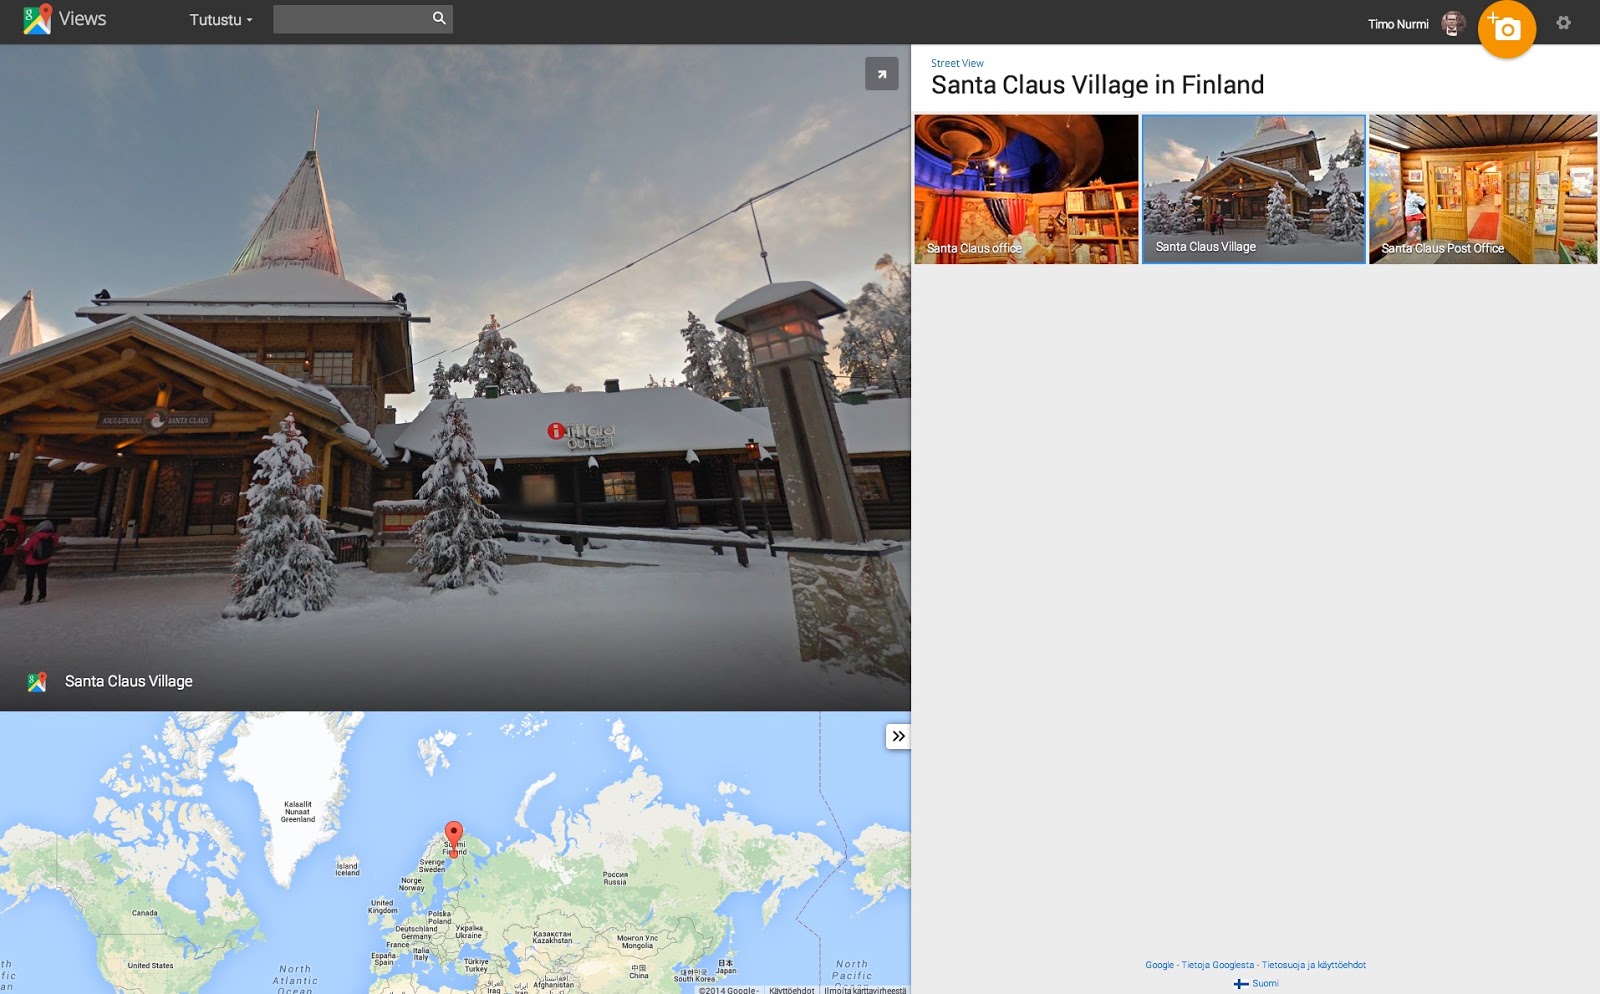 https://www.google.com/maps/views/u/0/streetview/santa-claus-village-in-finland